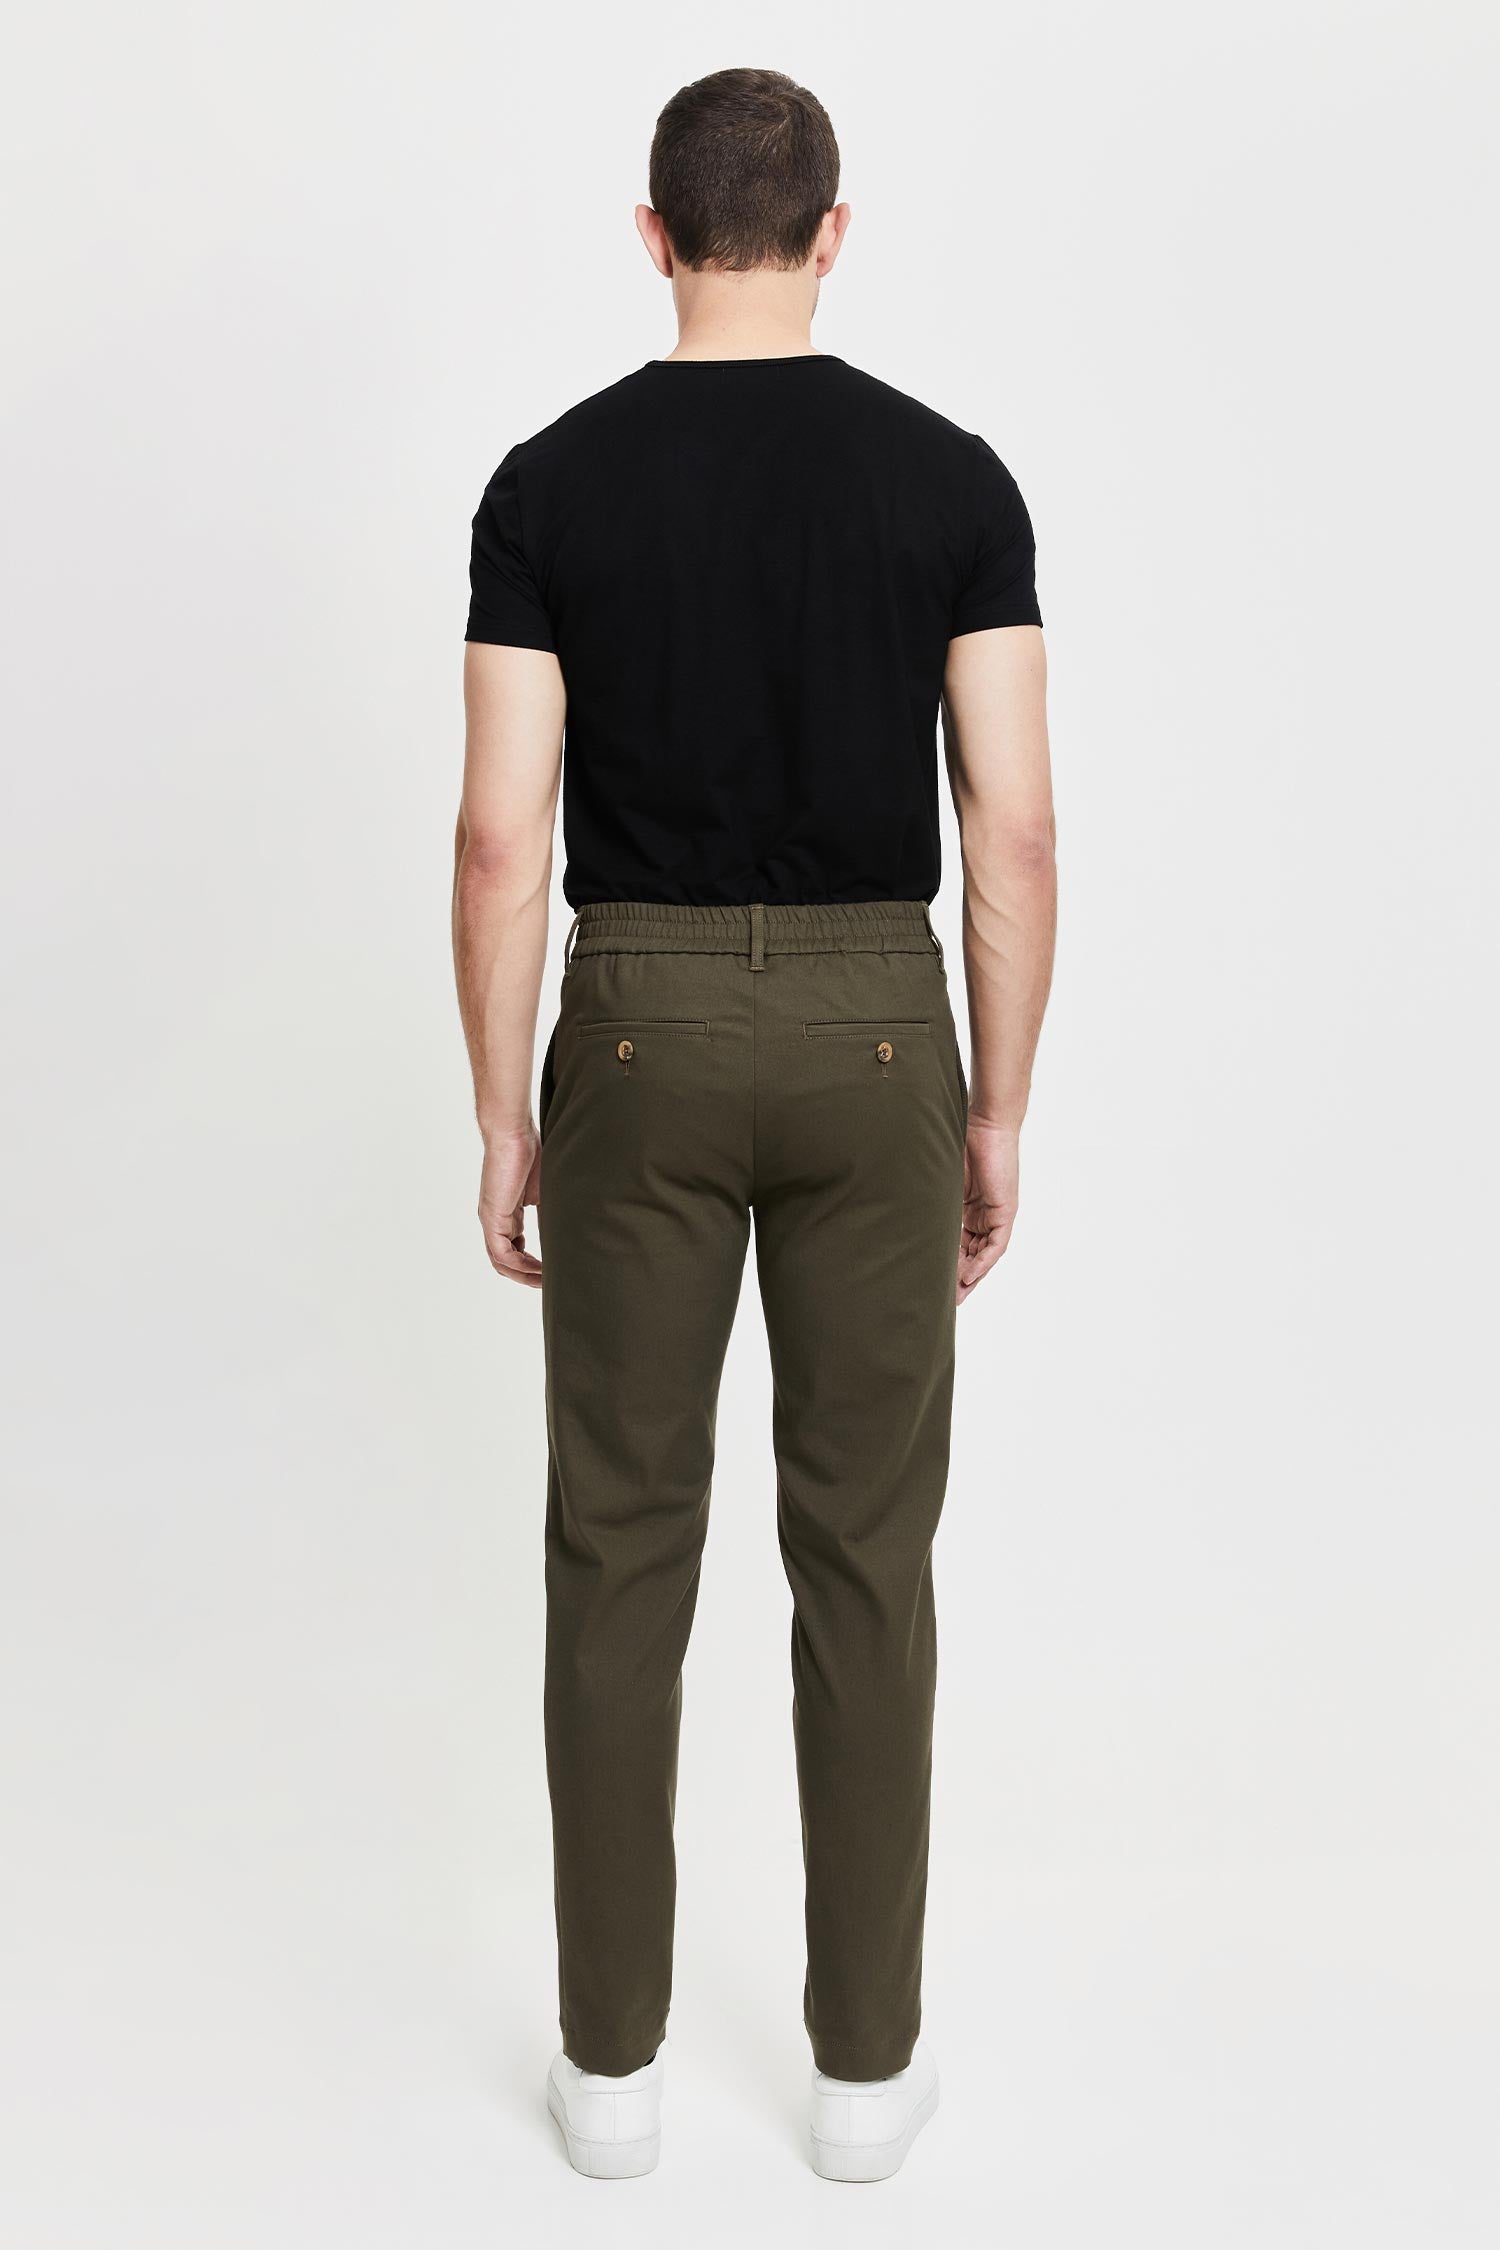 FRENN Seppo sustainable premium quality GOTS organic cotton trousers green